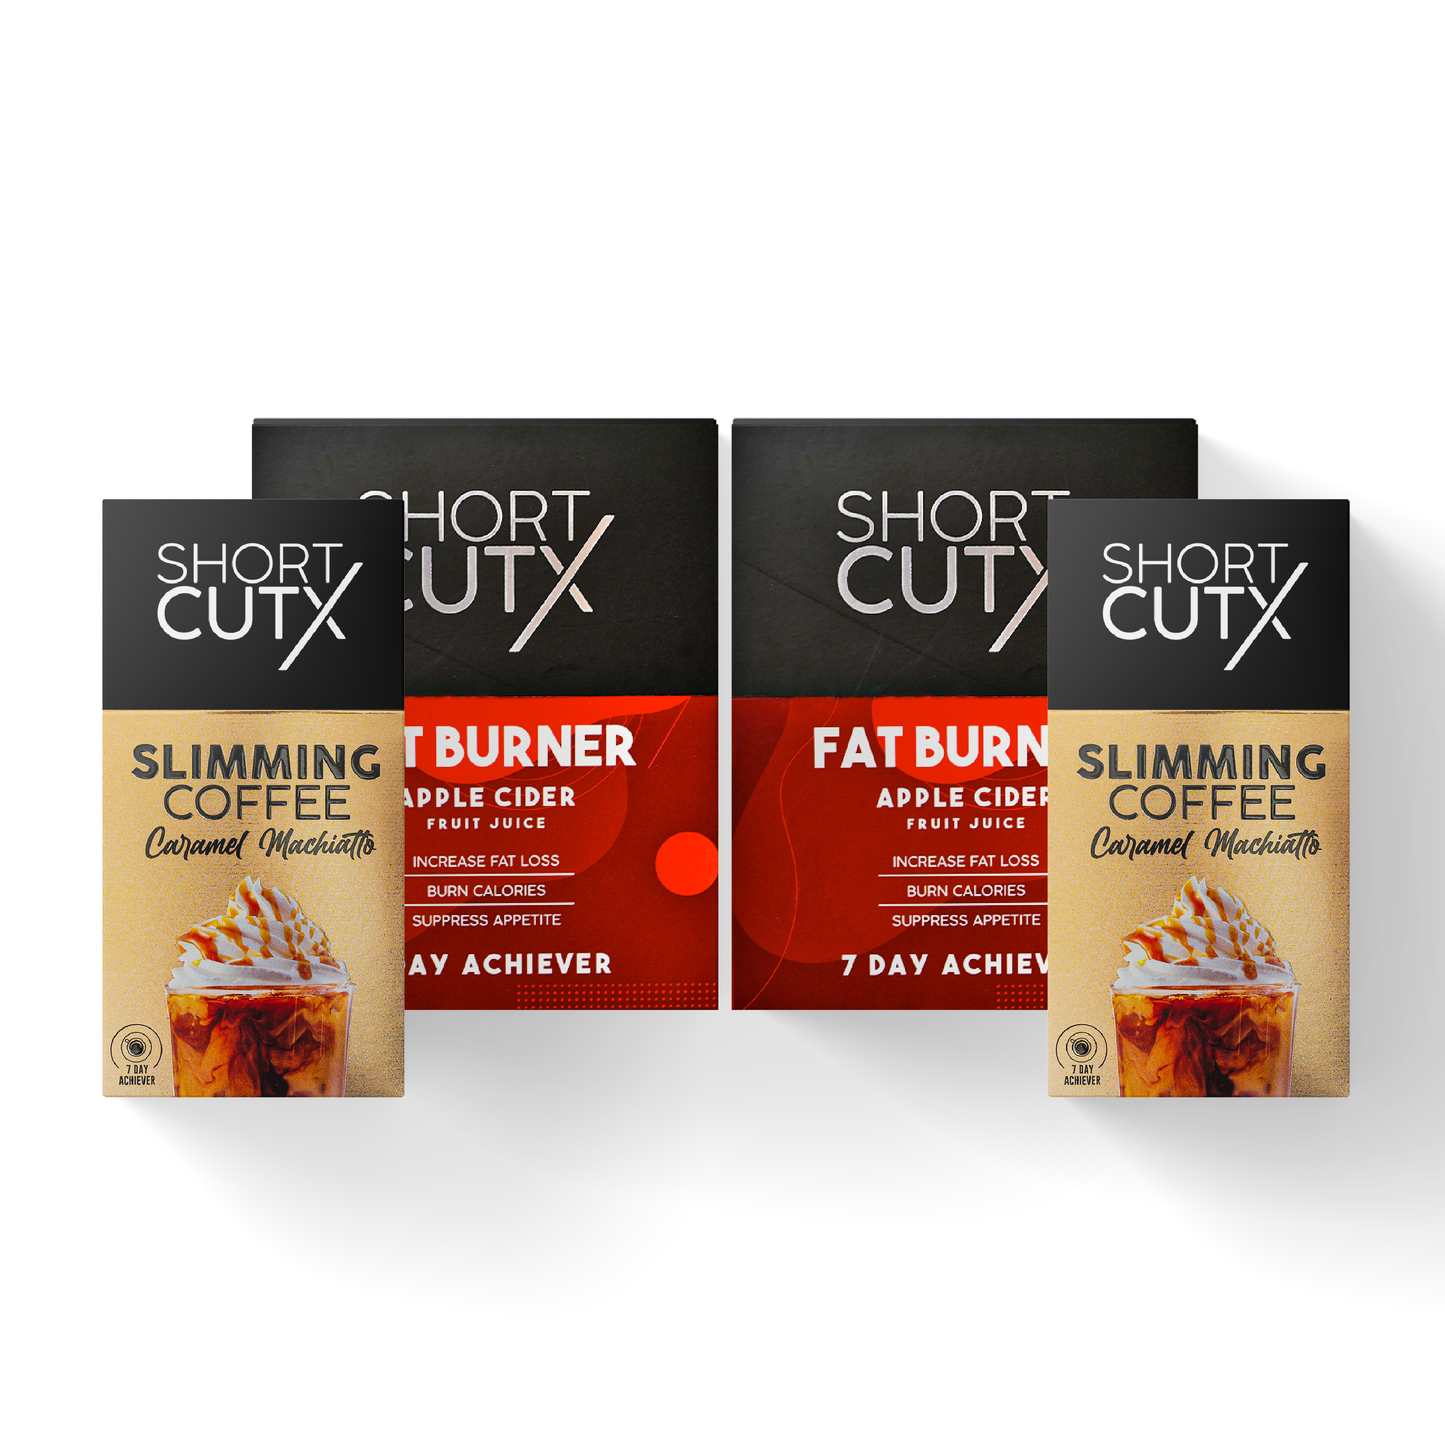 [BUNDLE OF 4] 2x Caramel Machiatto Slimming Coffee + 2x Fat Burner Apple Cider Fruit Juice [SHORTCUTX EXTREME WEIGHT LOSS COMBO]